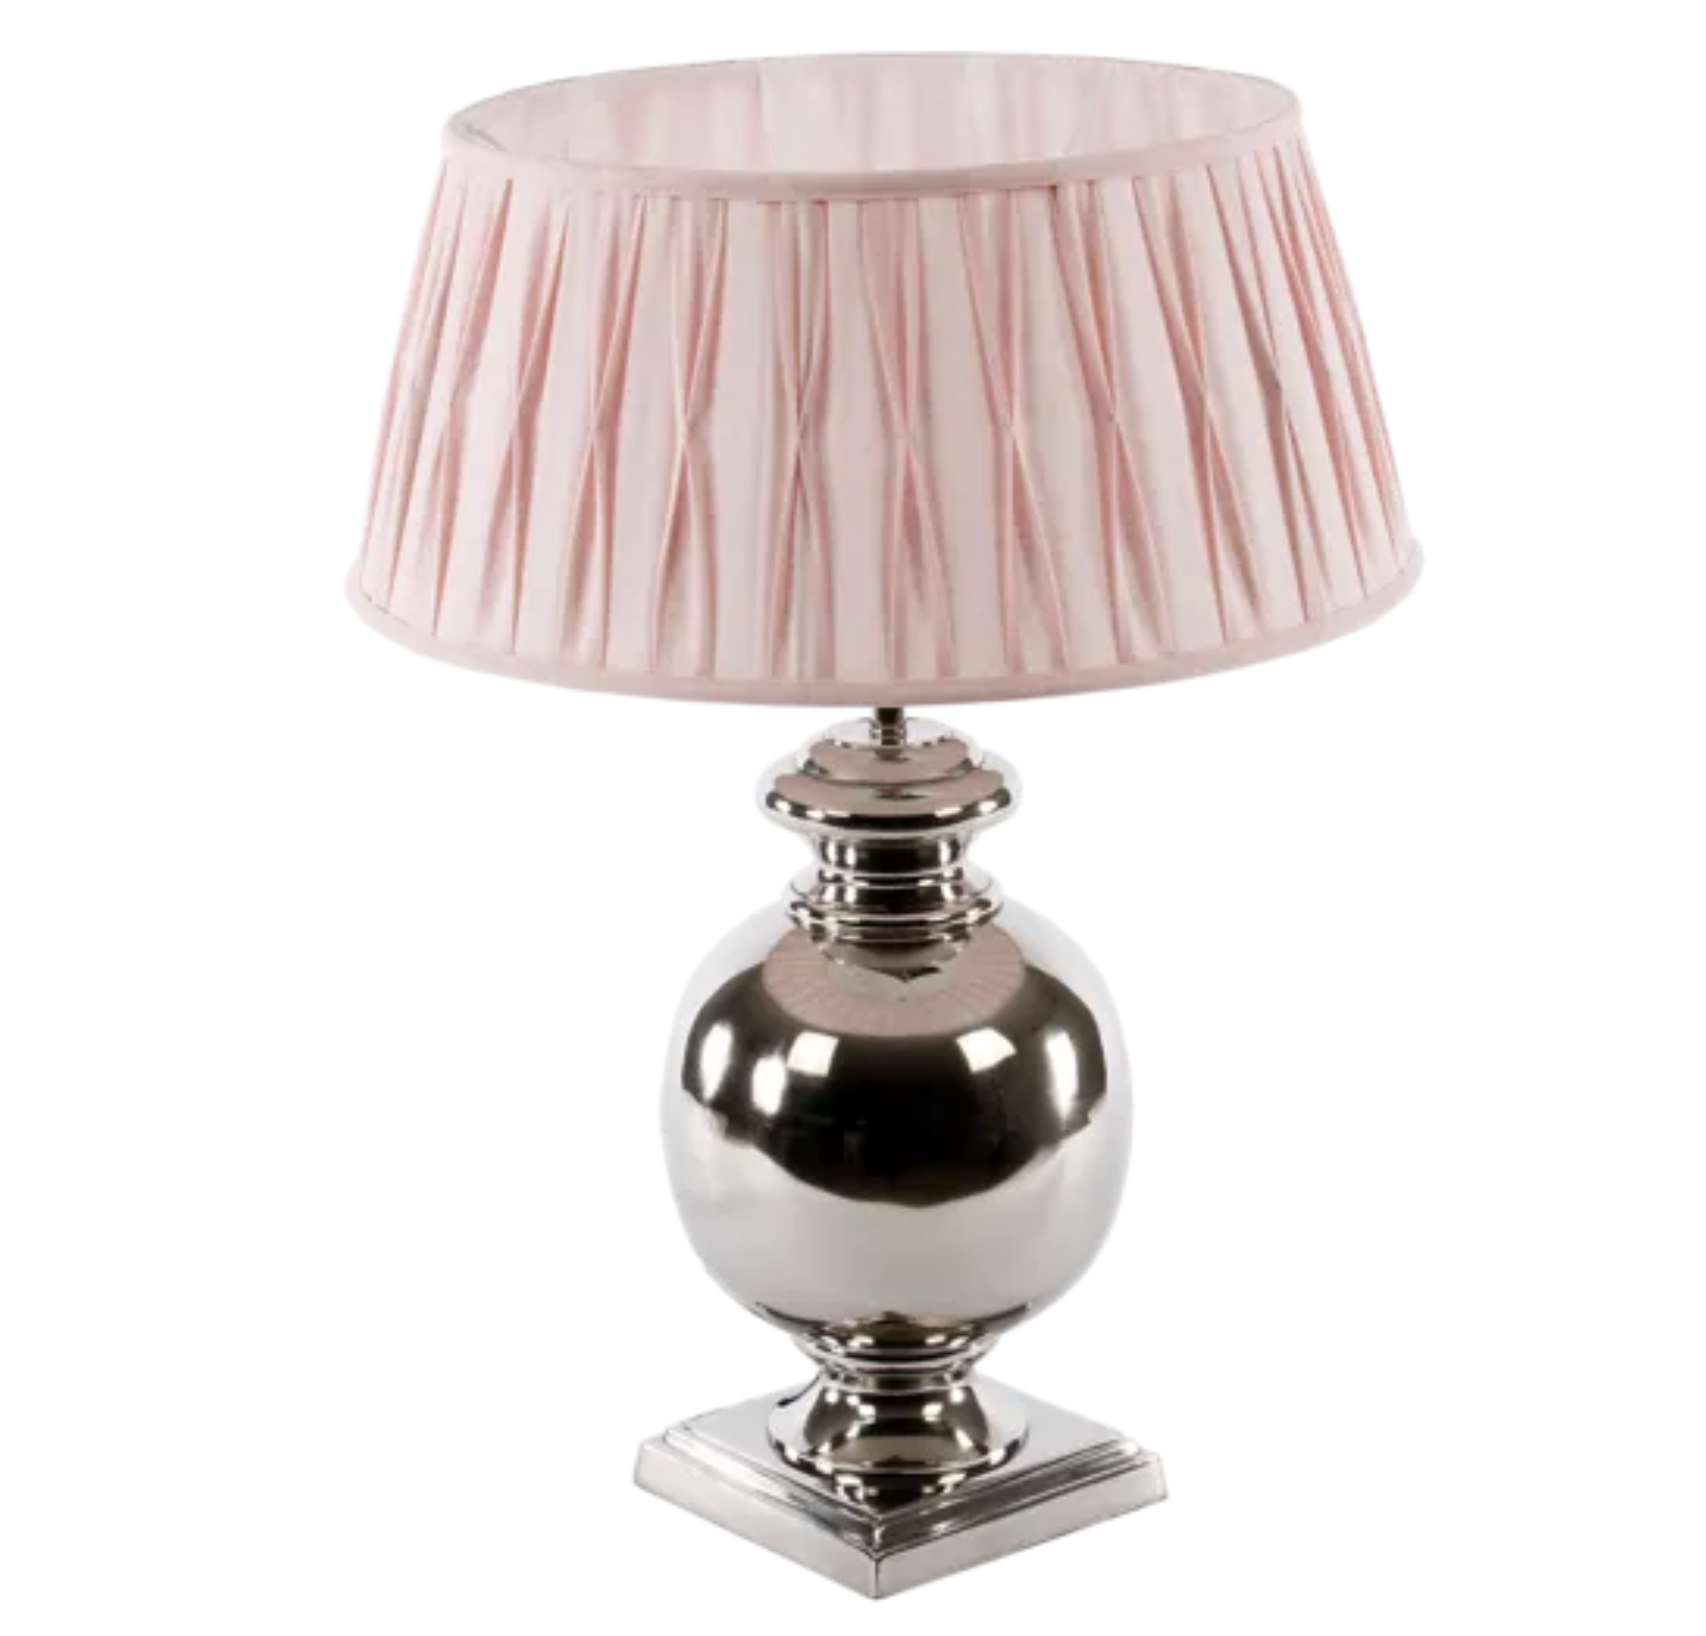 Pietro table lamp